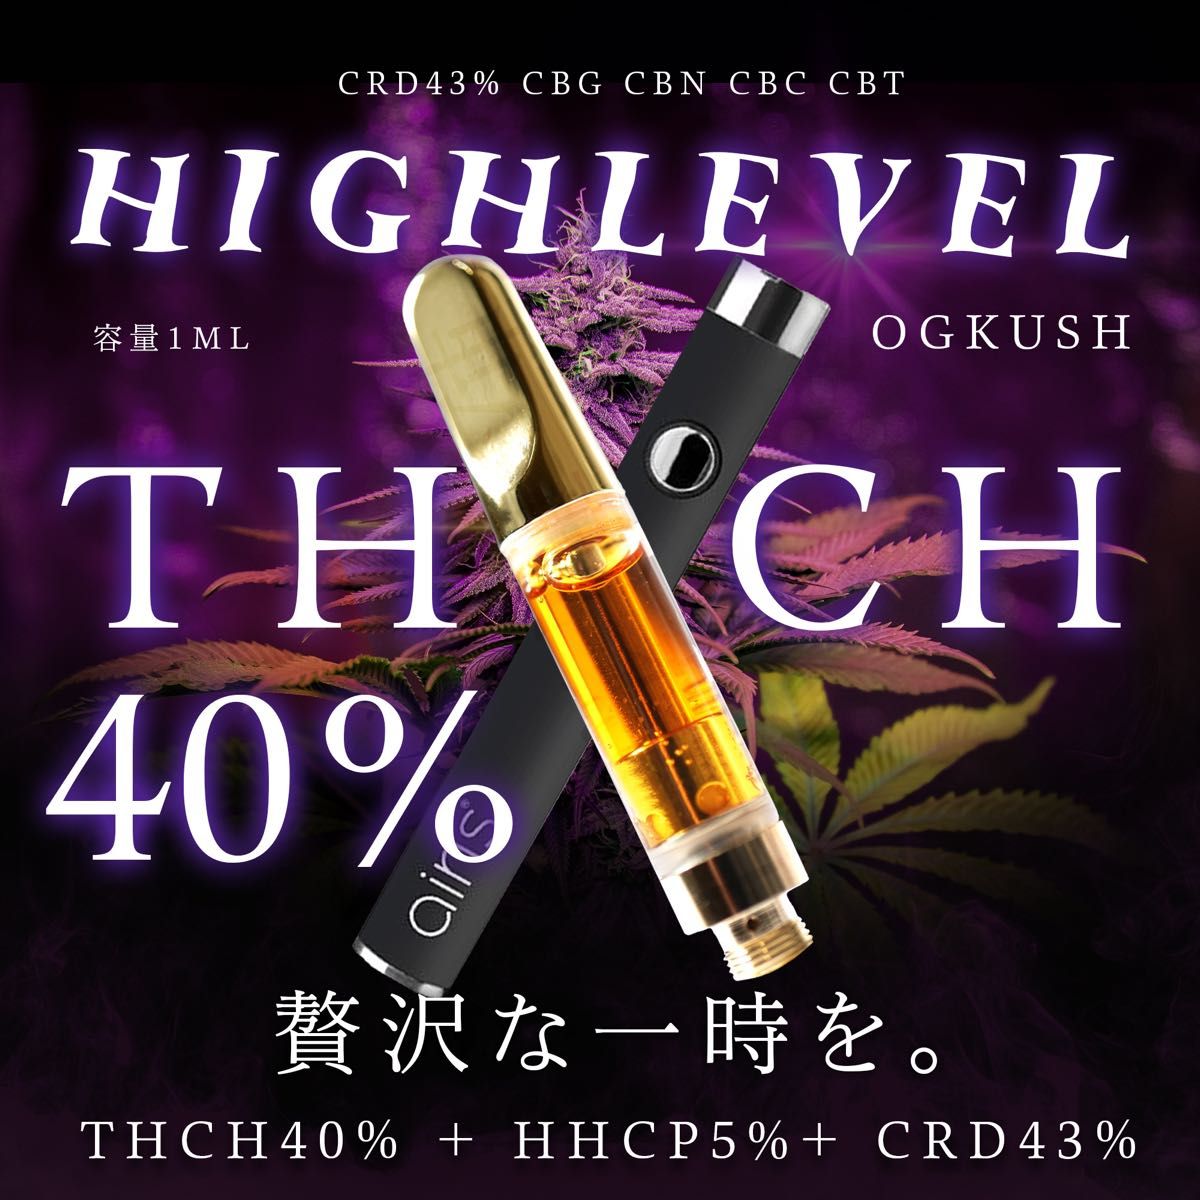 THCHハイレベルリキッド THCH HHCP CRD配合 高濃度リキッド 1ml 麻由来